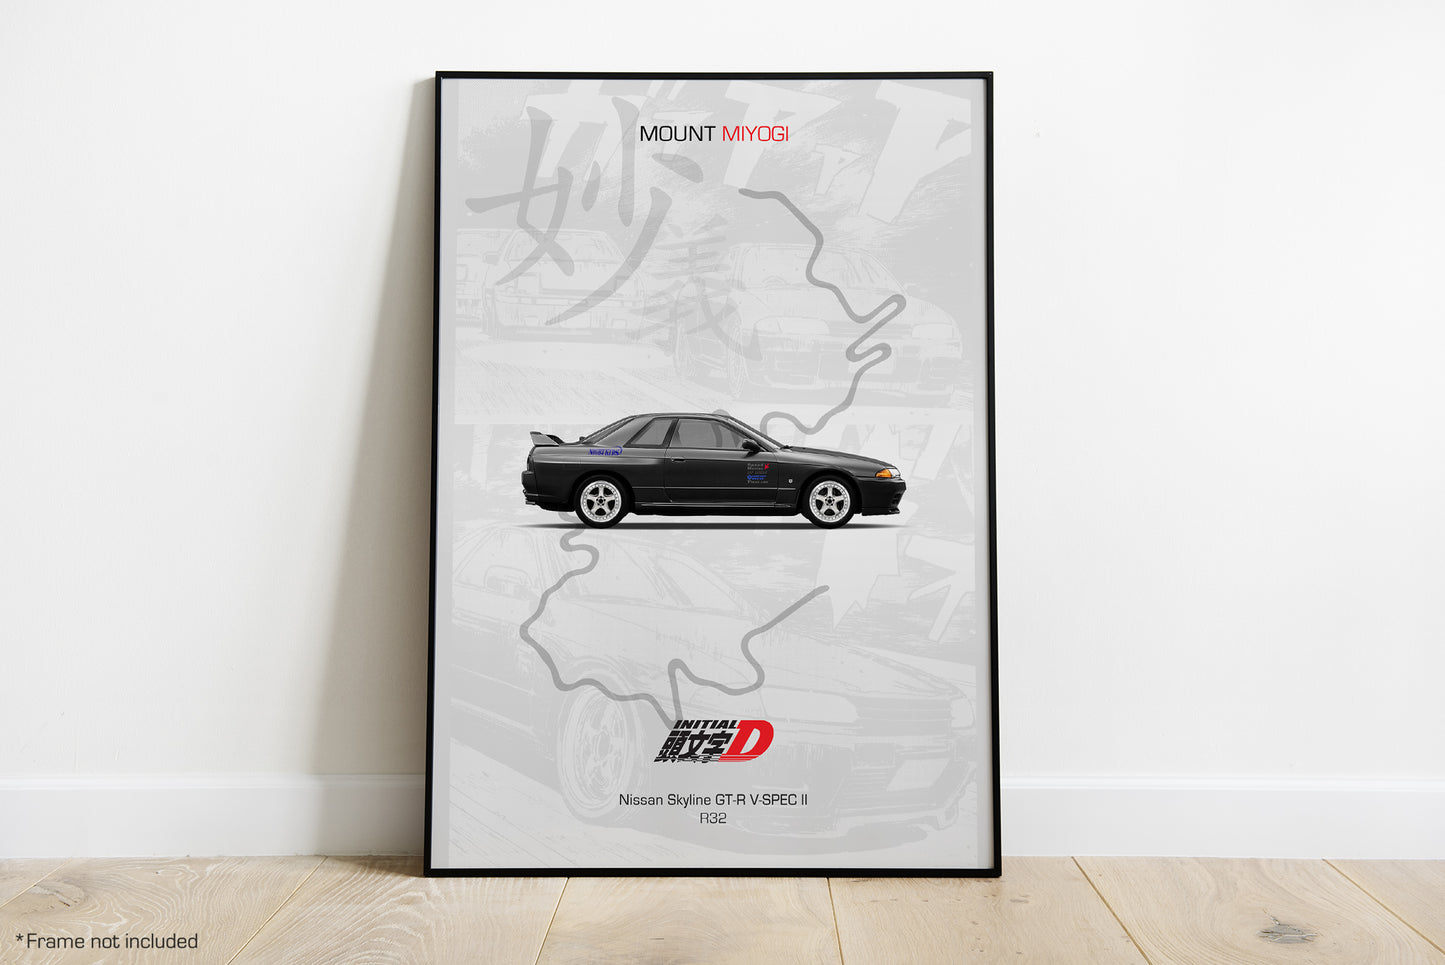 Nissan Skyline GT-R R32 - Initial D Poster